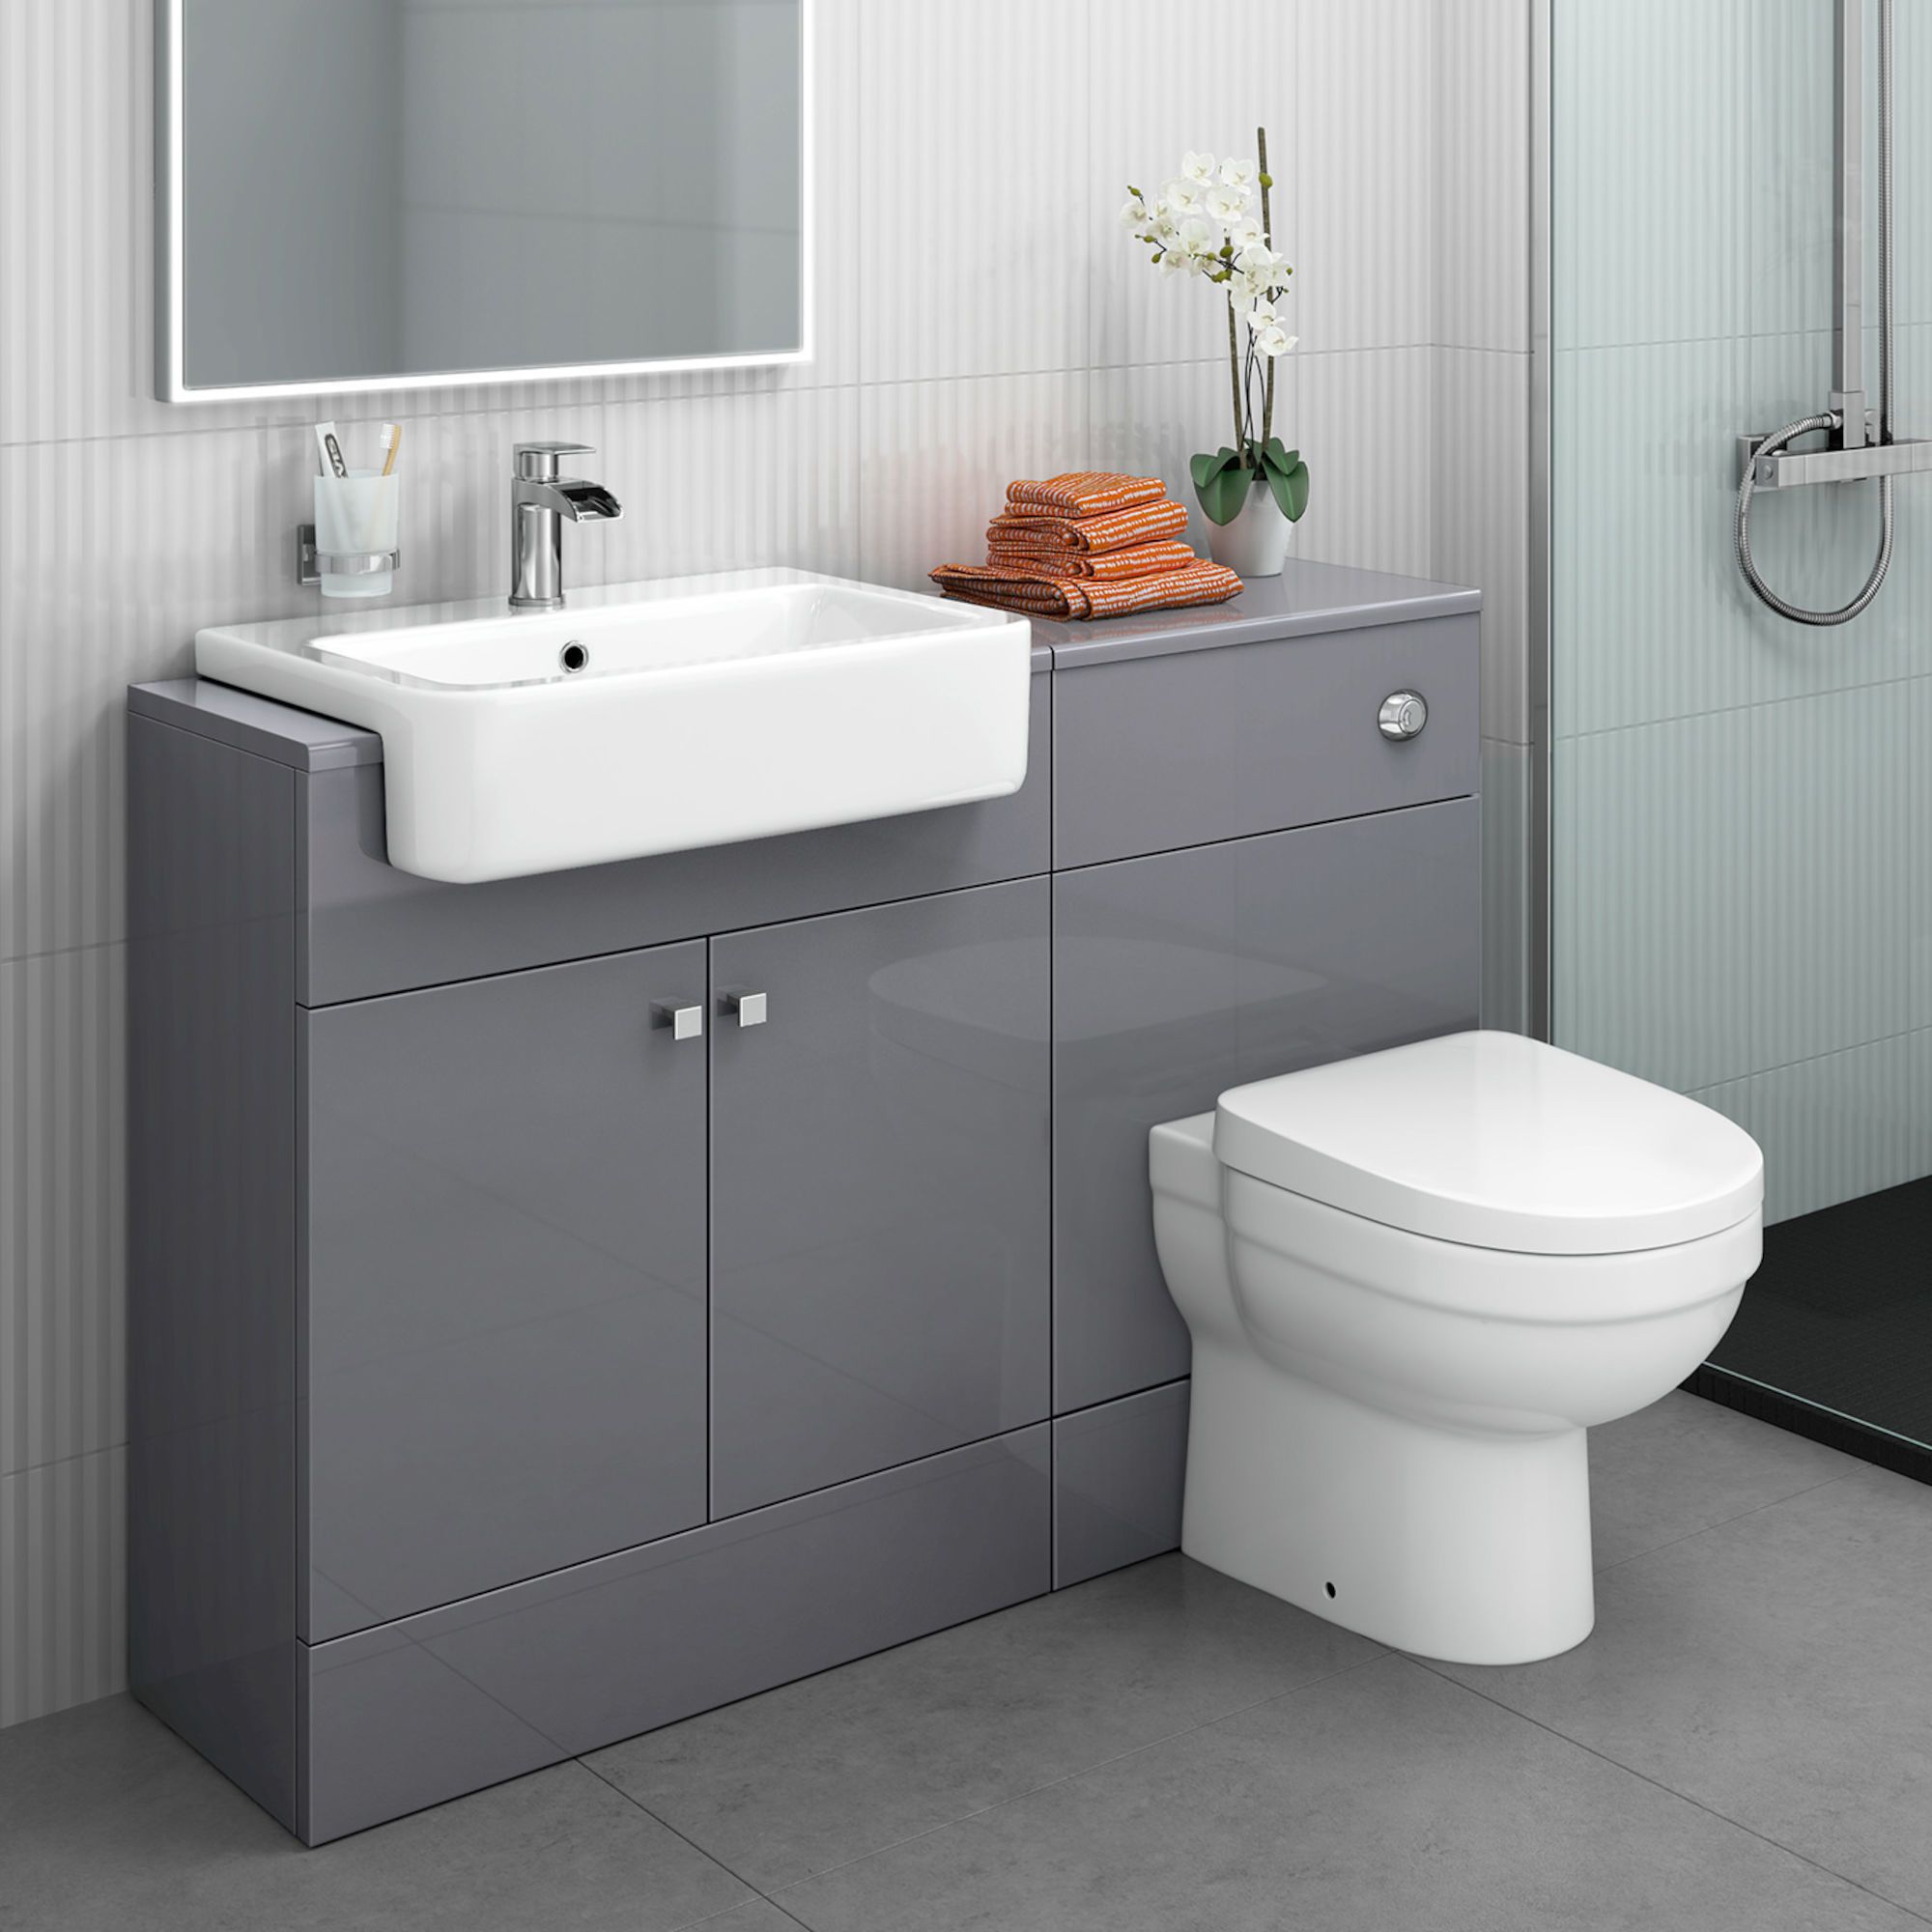 toilet and sink vanity unit clearance Sink units soak storiestrending